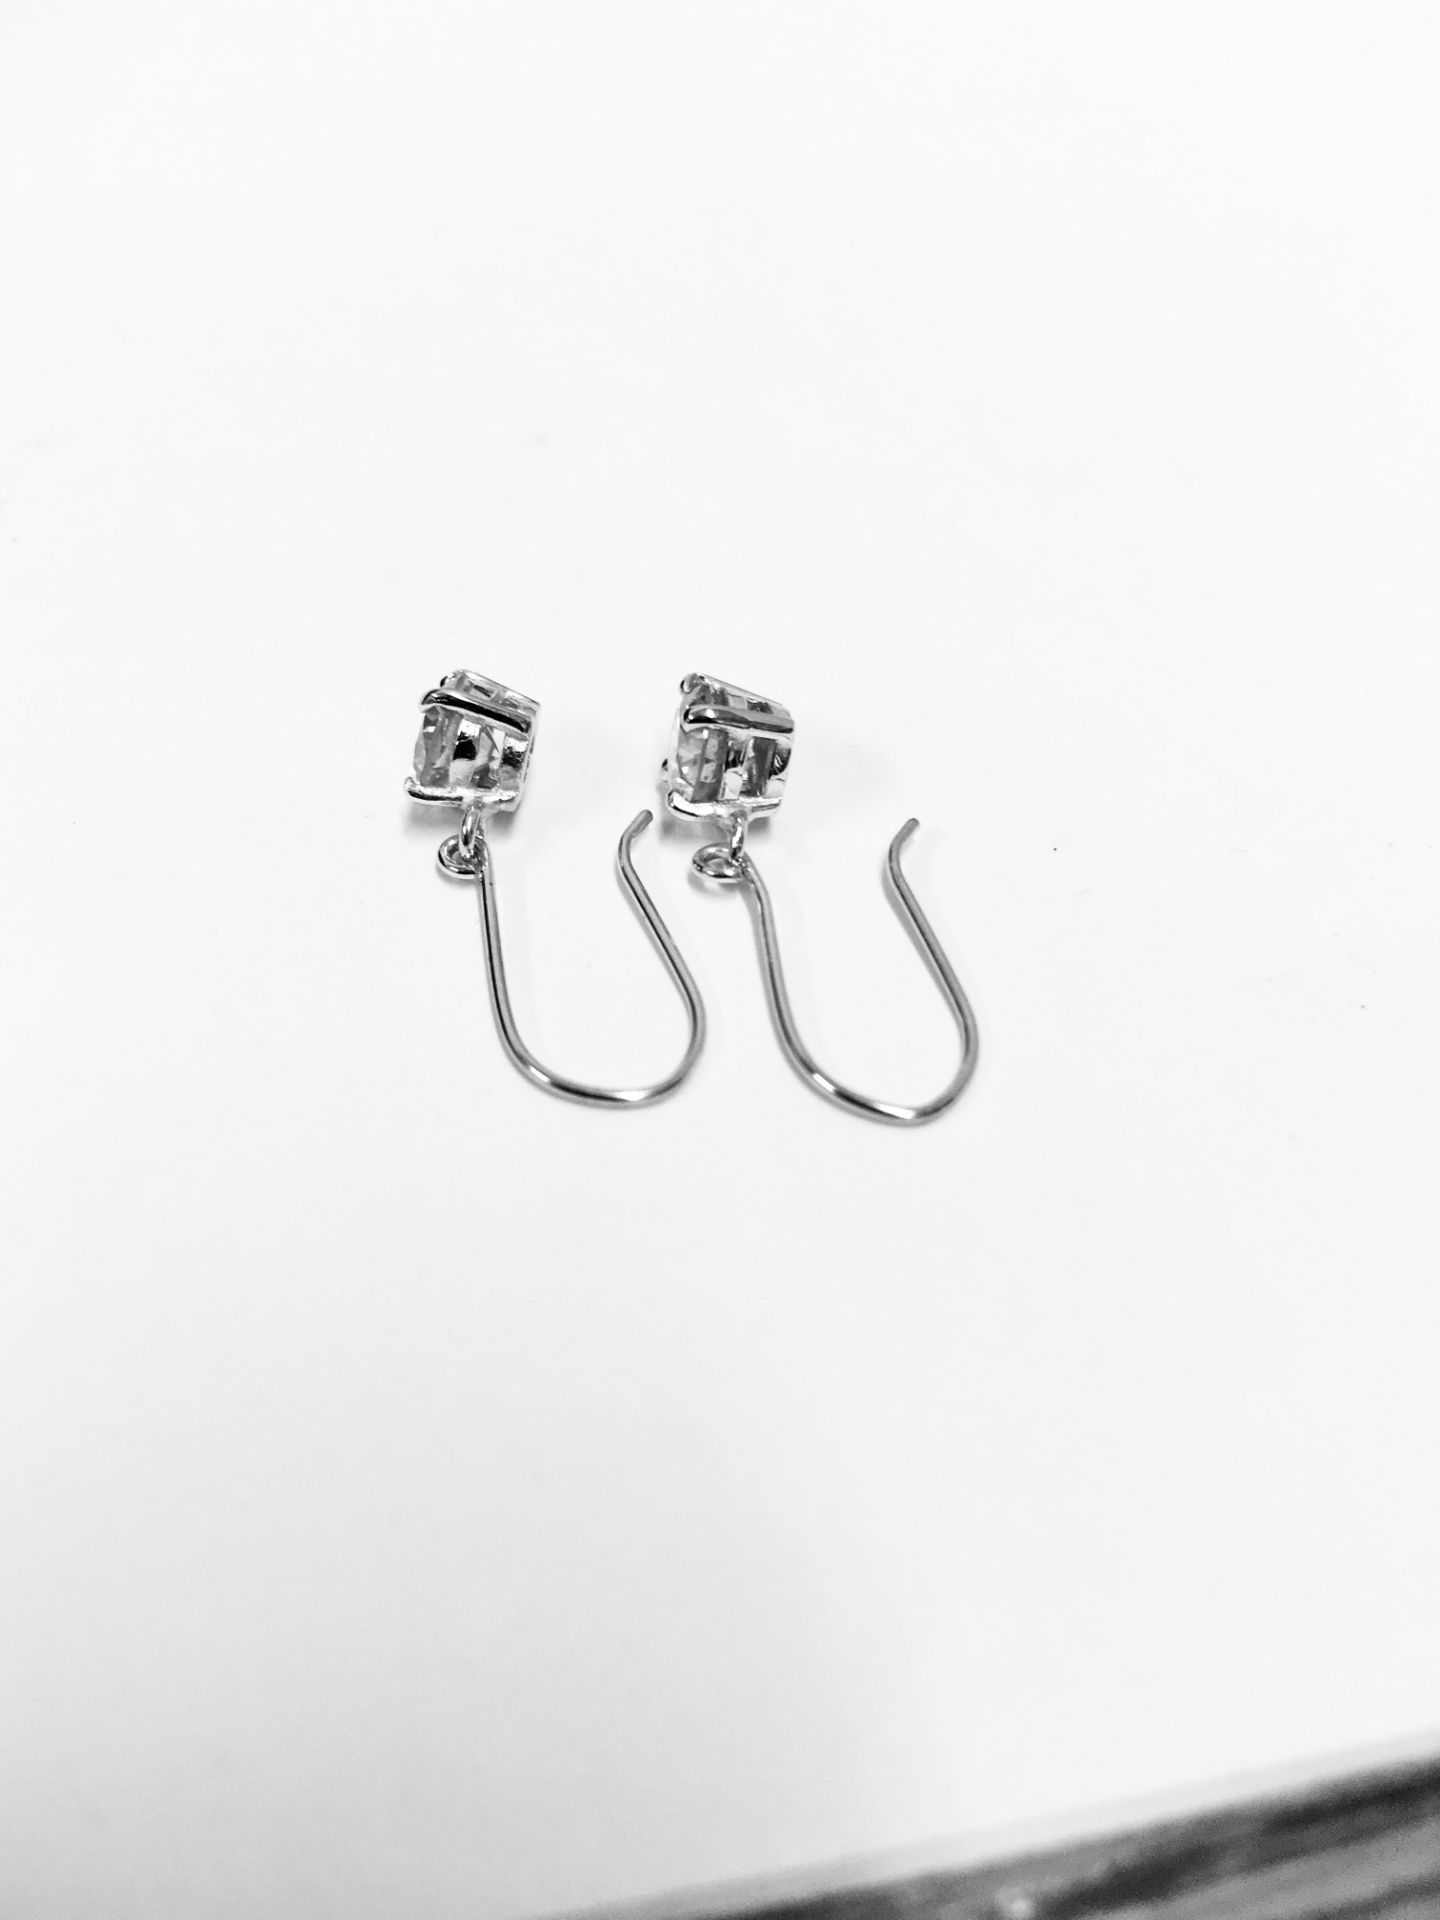 18ct diamond drop earrings 1.00ct total h colour vs enhanced .2gms 18ct 2 gms uk made appraisal - Image 3 of 5